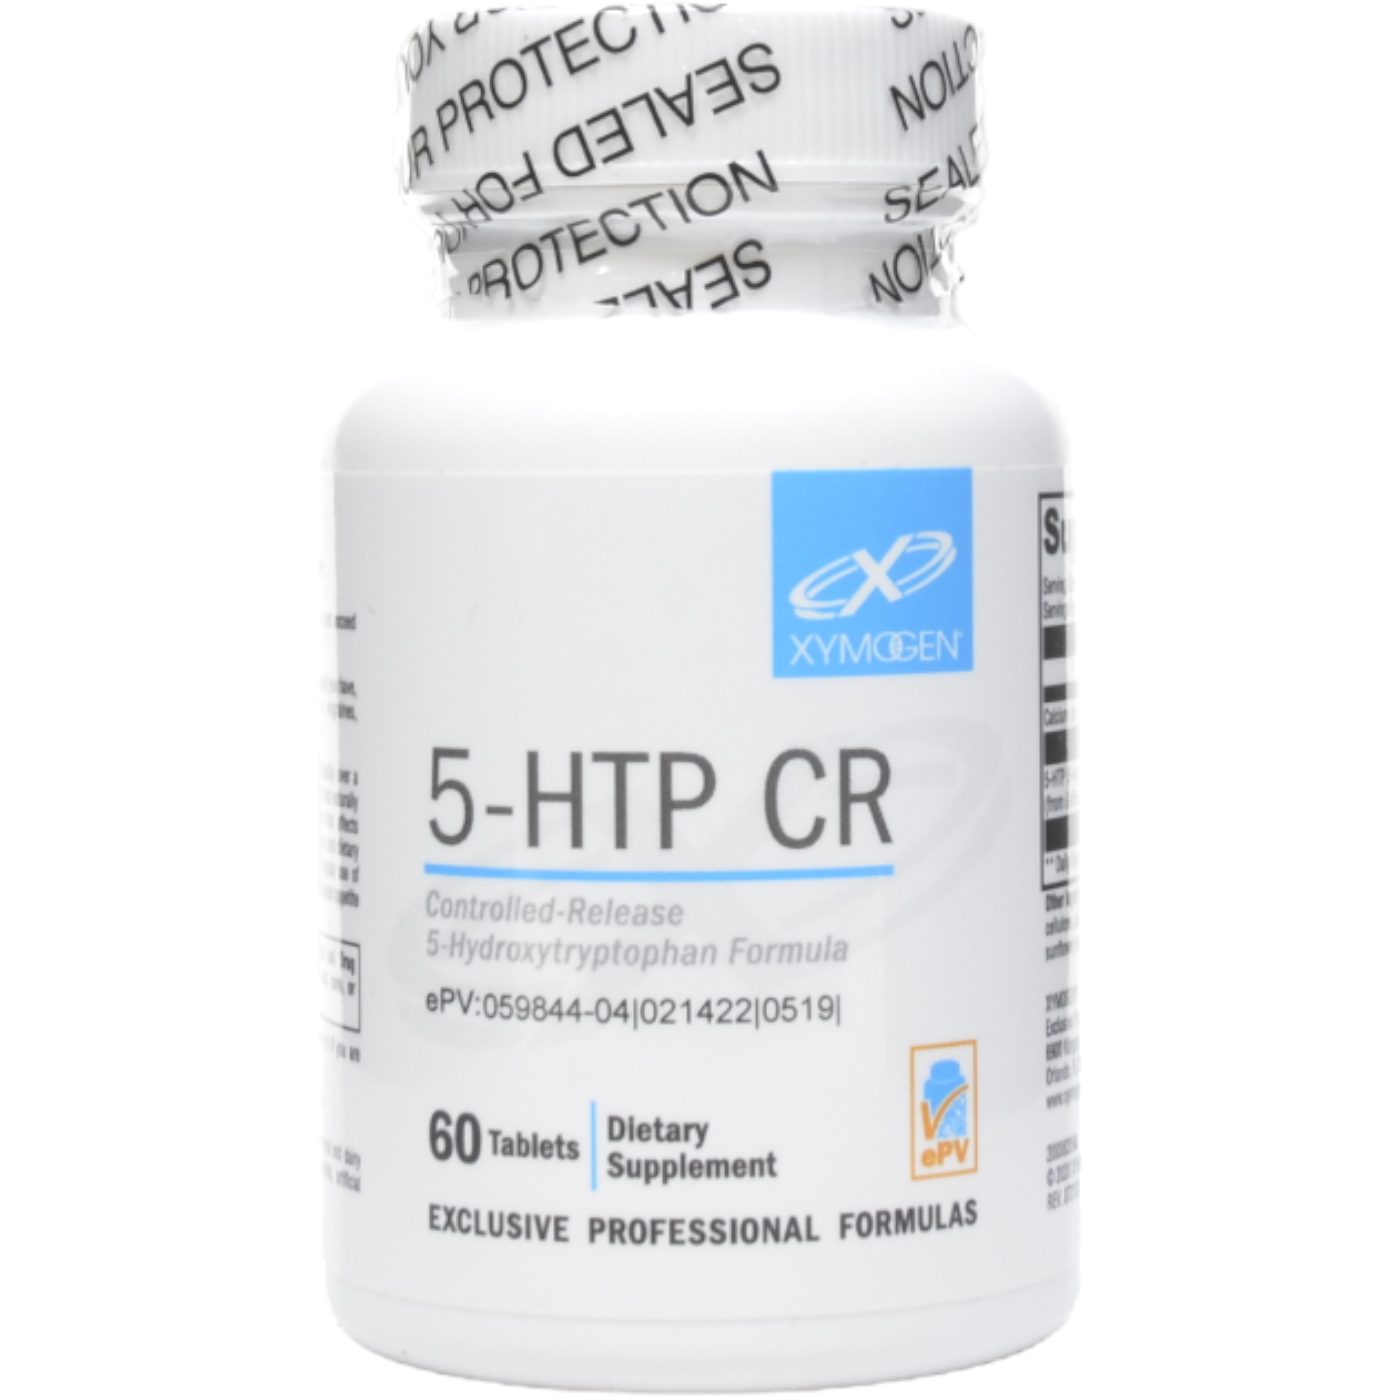 Xymogen 5-HTP CR 60 Tablets - ePothex